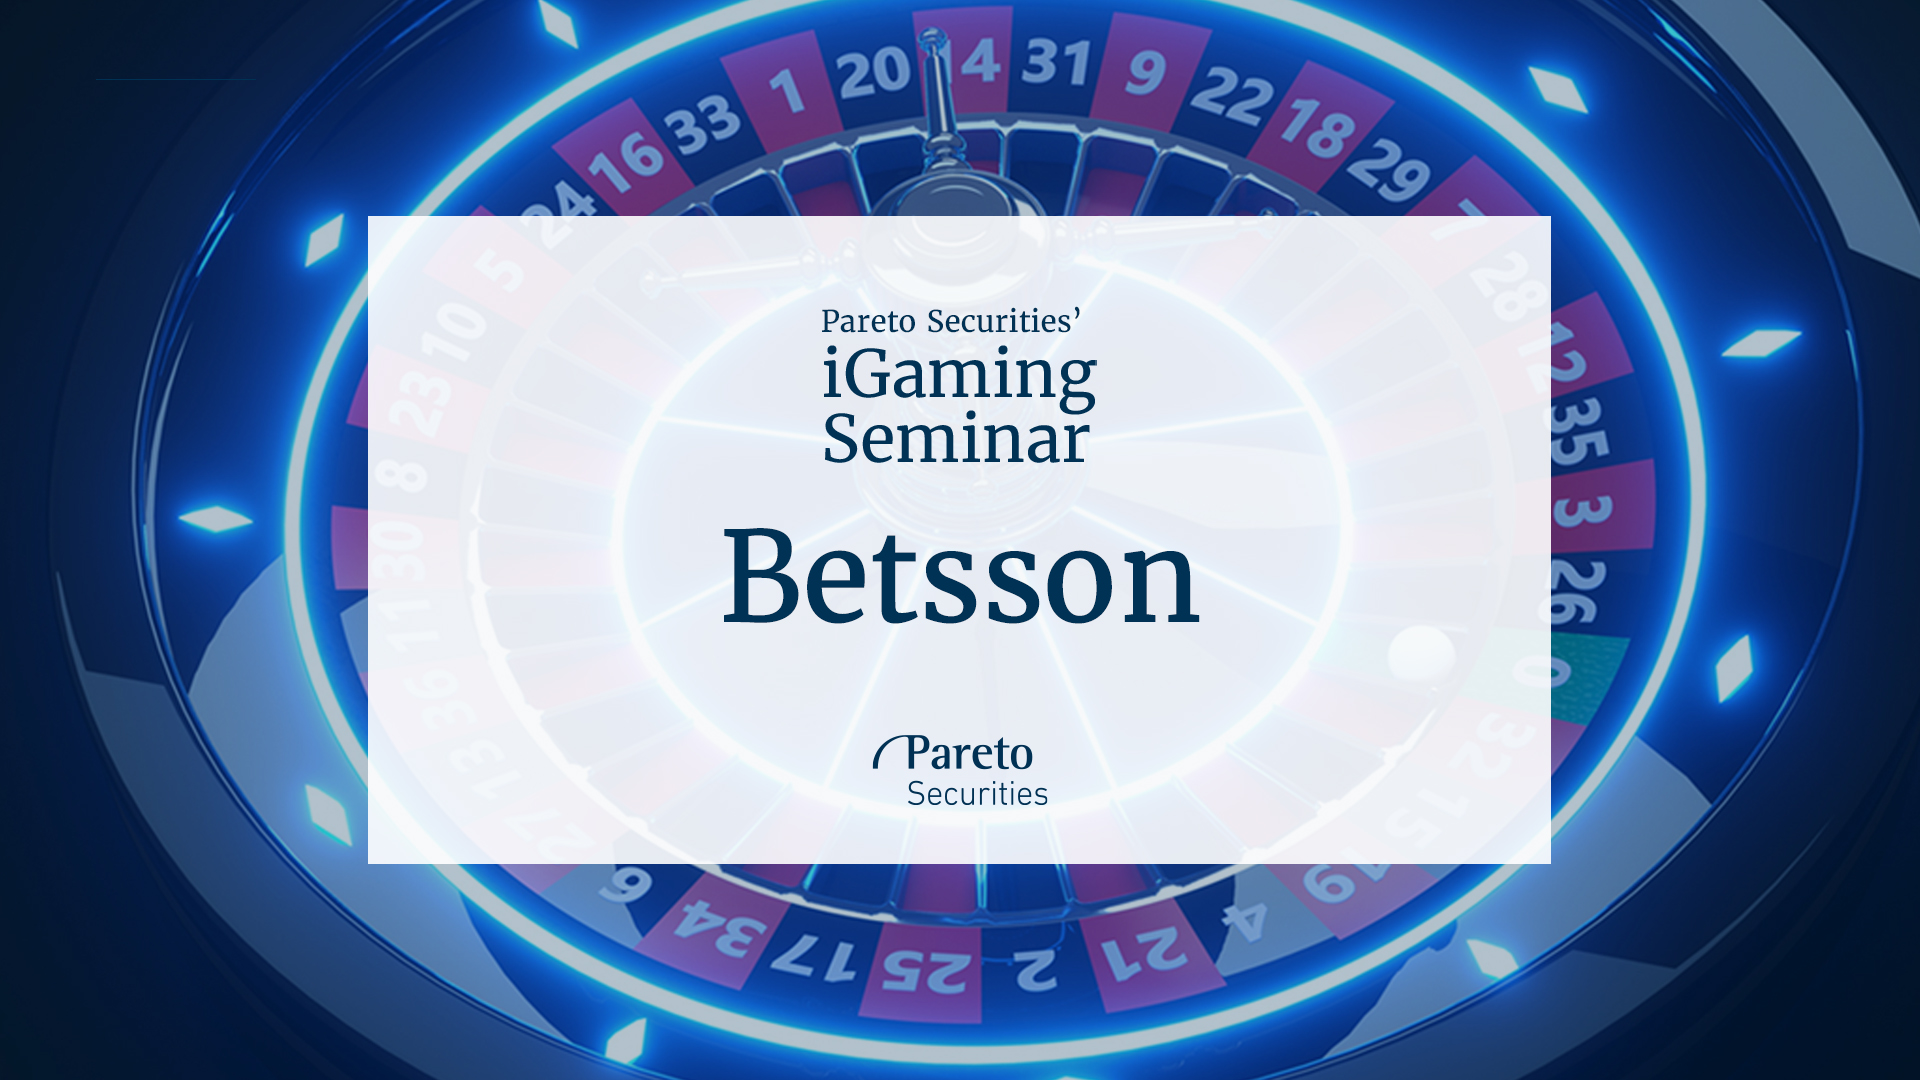 Betsson / Pareto Securities’ virtual iGaming seminar